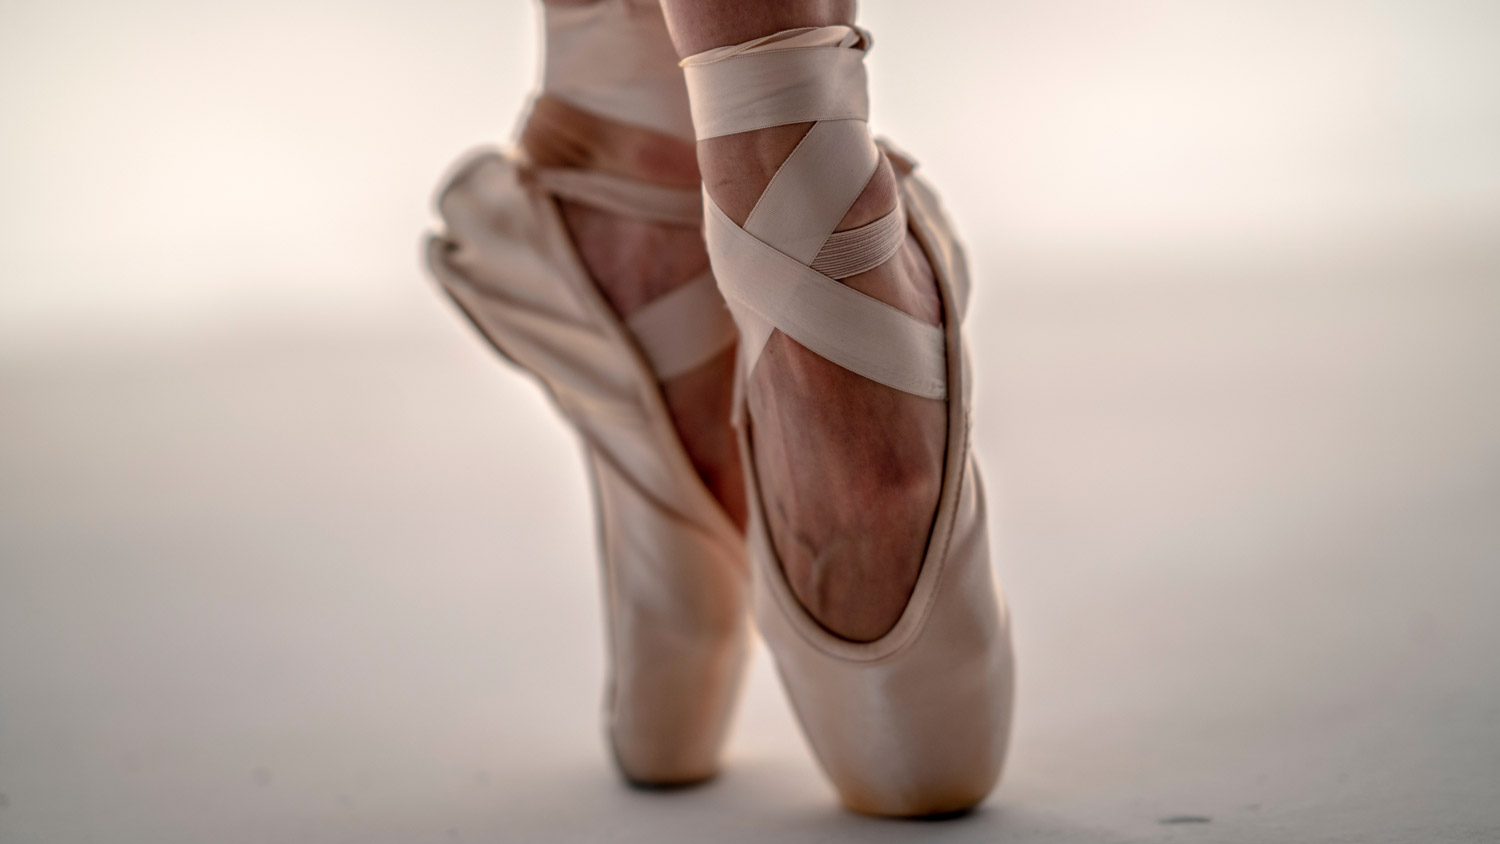 balance-by-heather-gream-ballet-shoes-nihal-demirci-UYG1U5wj3Tk-1500.jpg